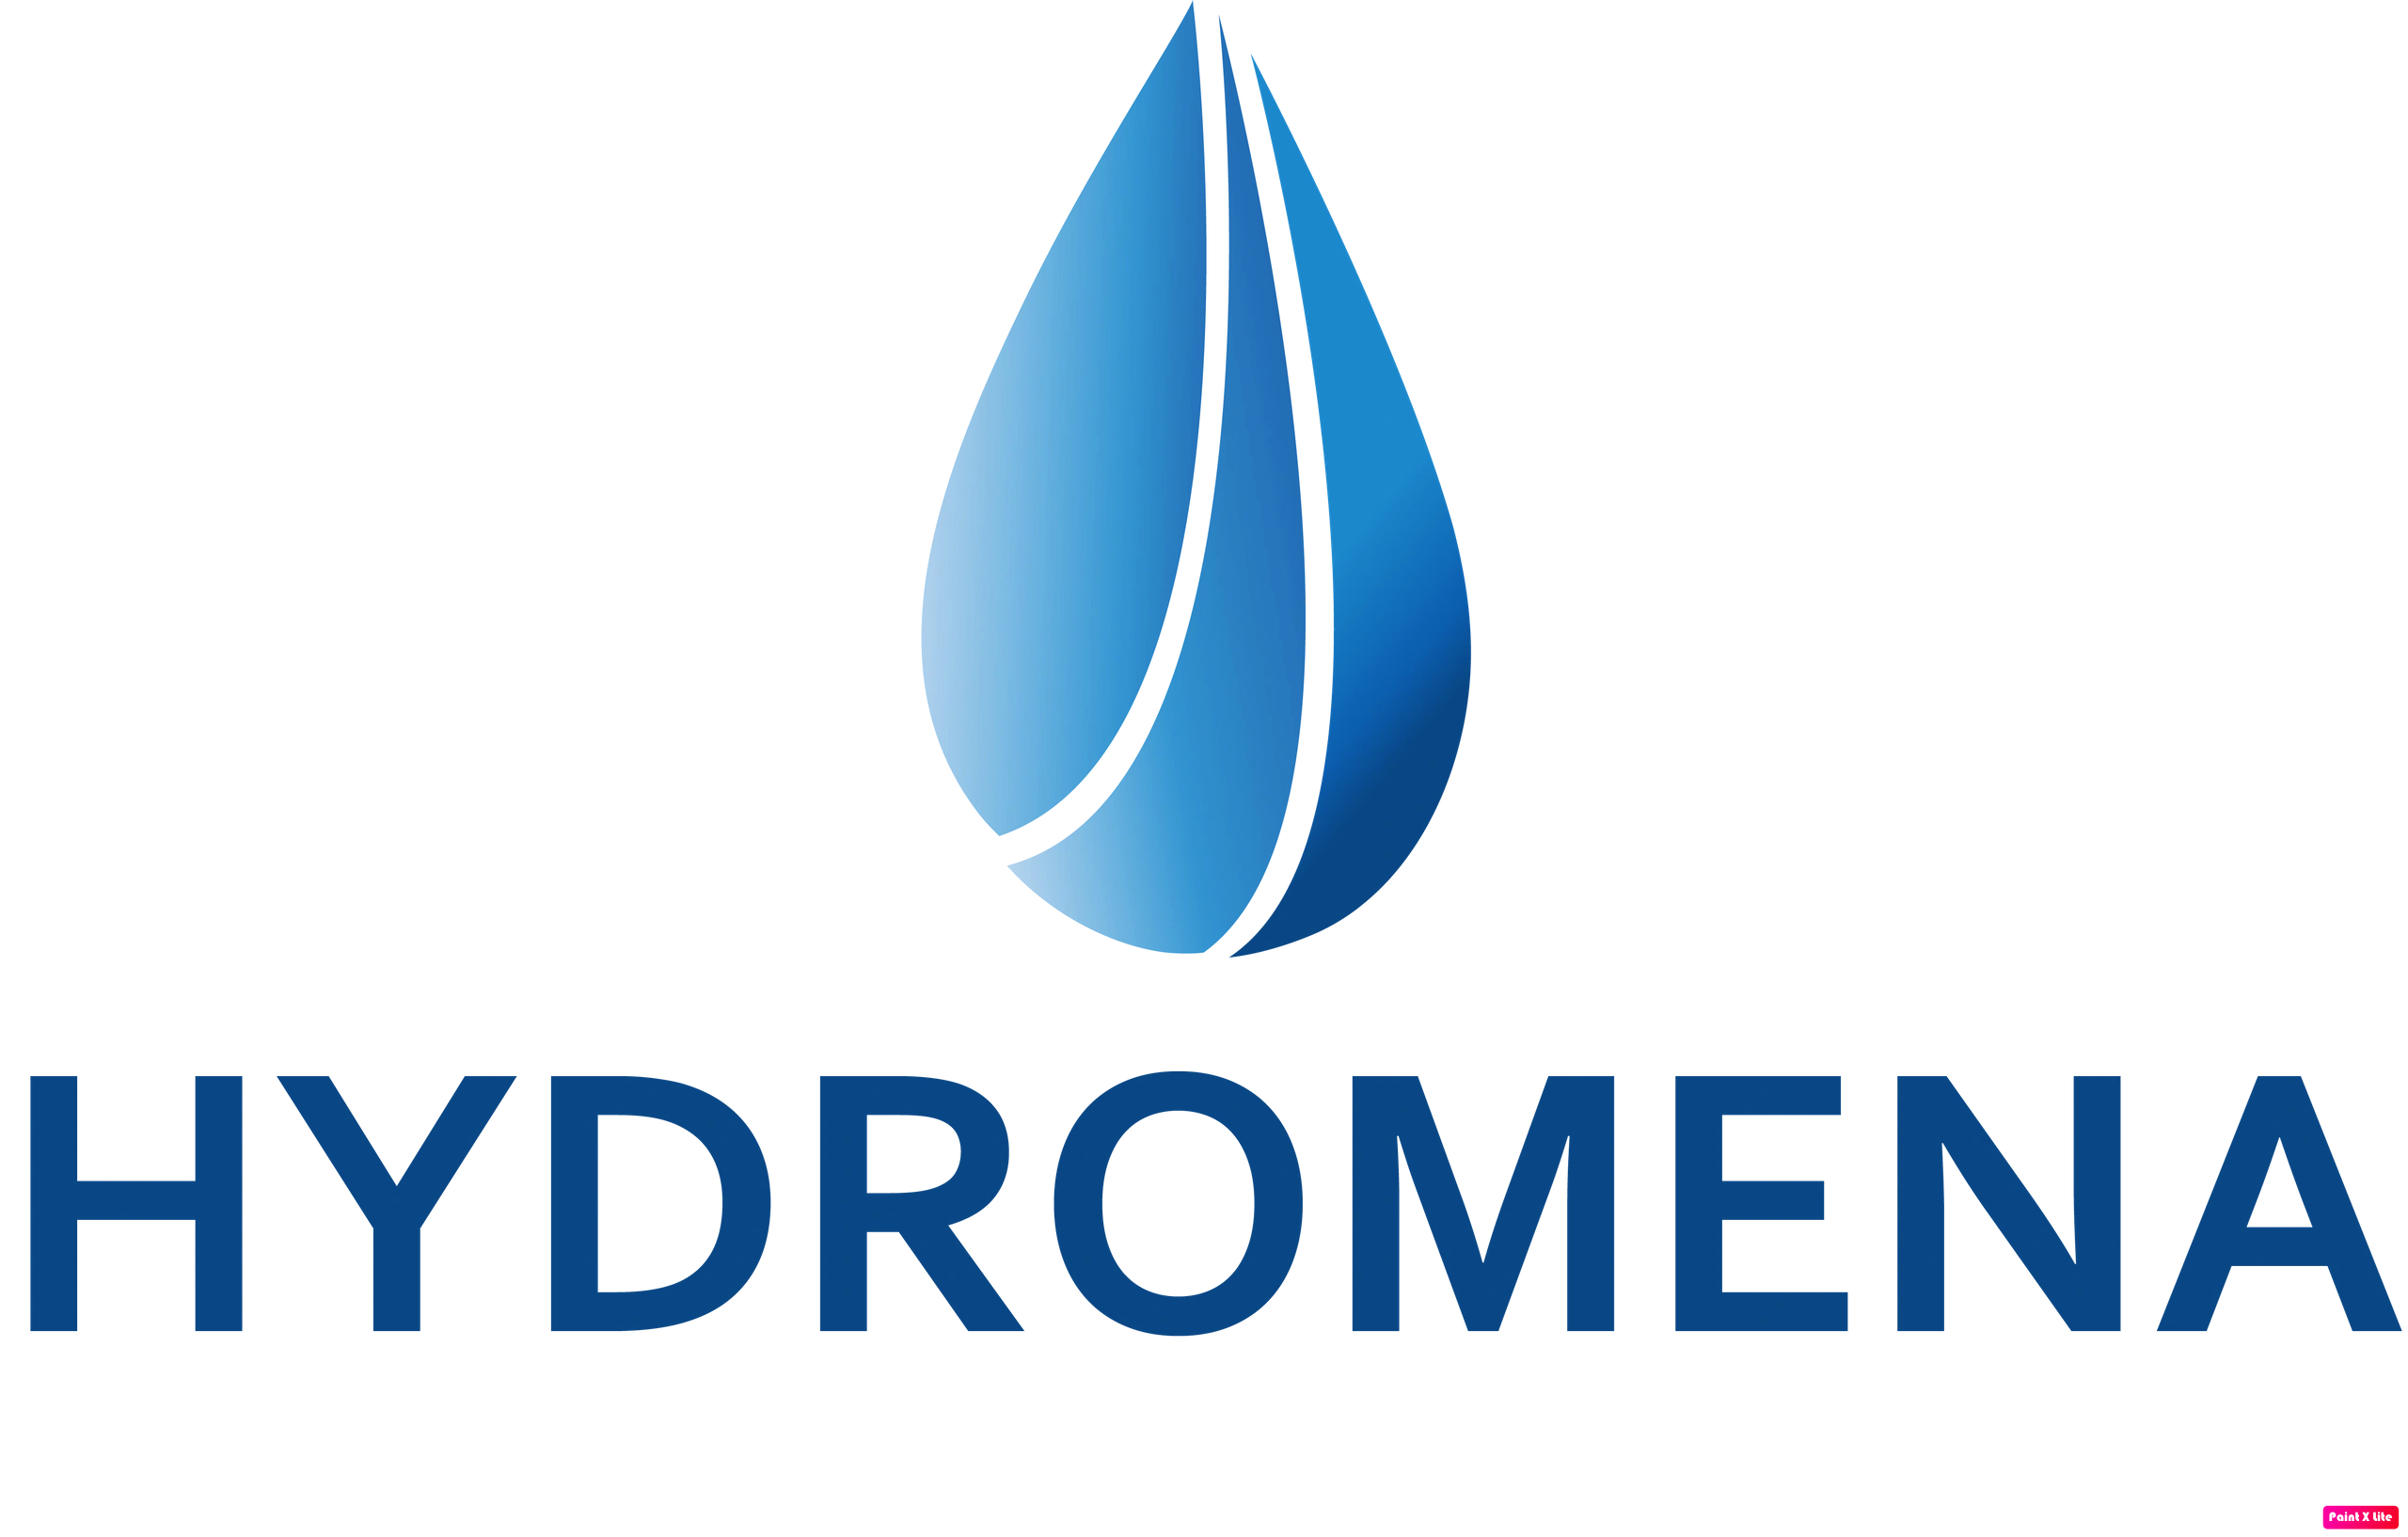 Hydromena logo